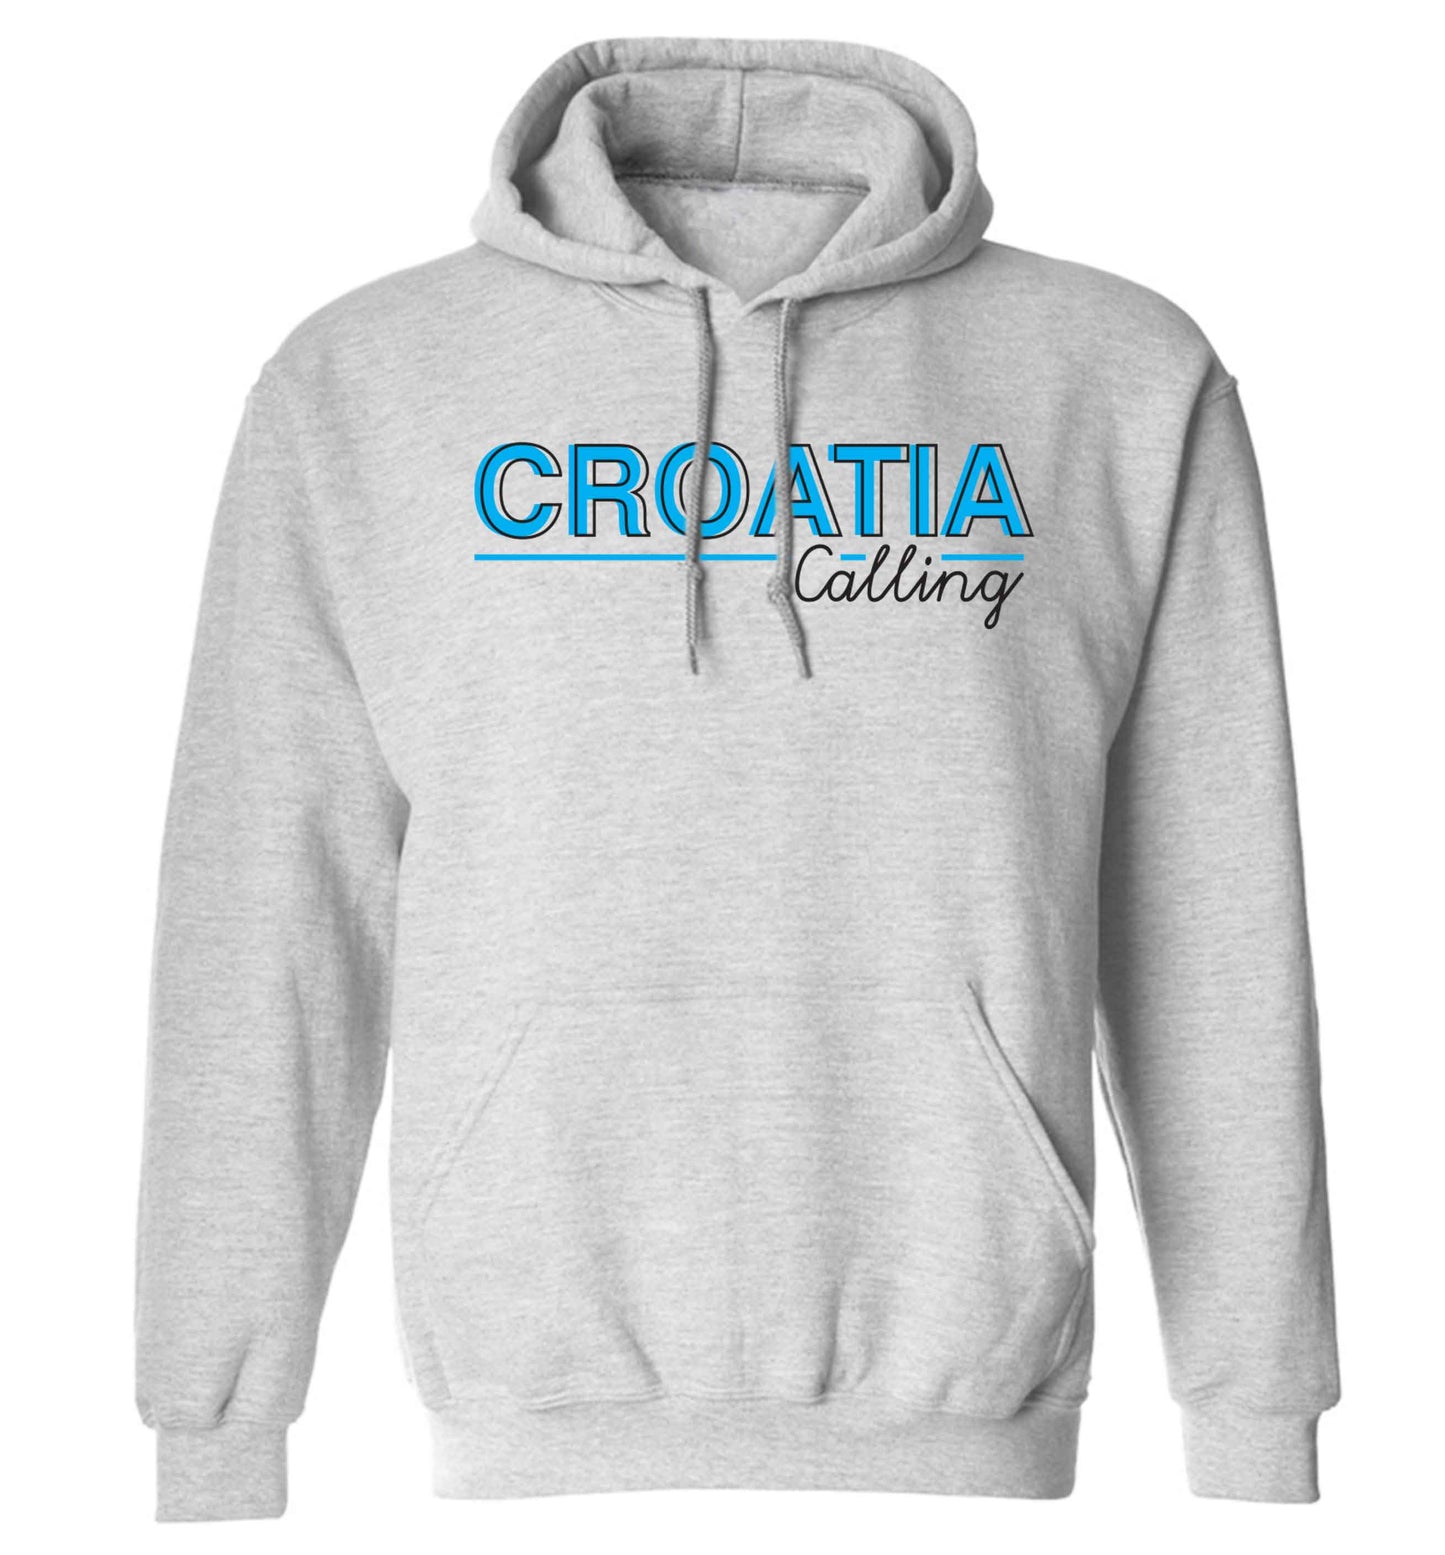 Croatia calling adults unisex grey hoodie 2XL